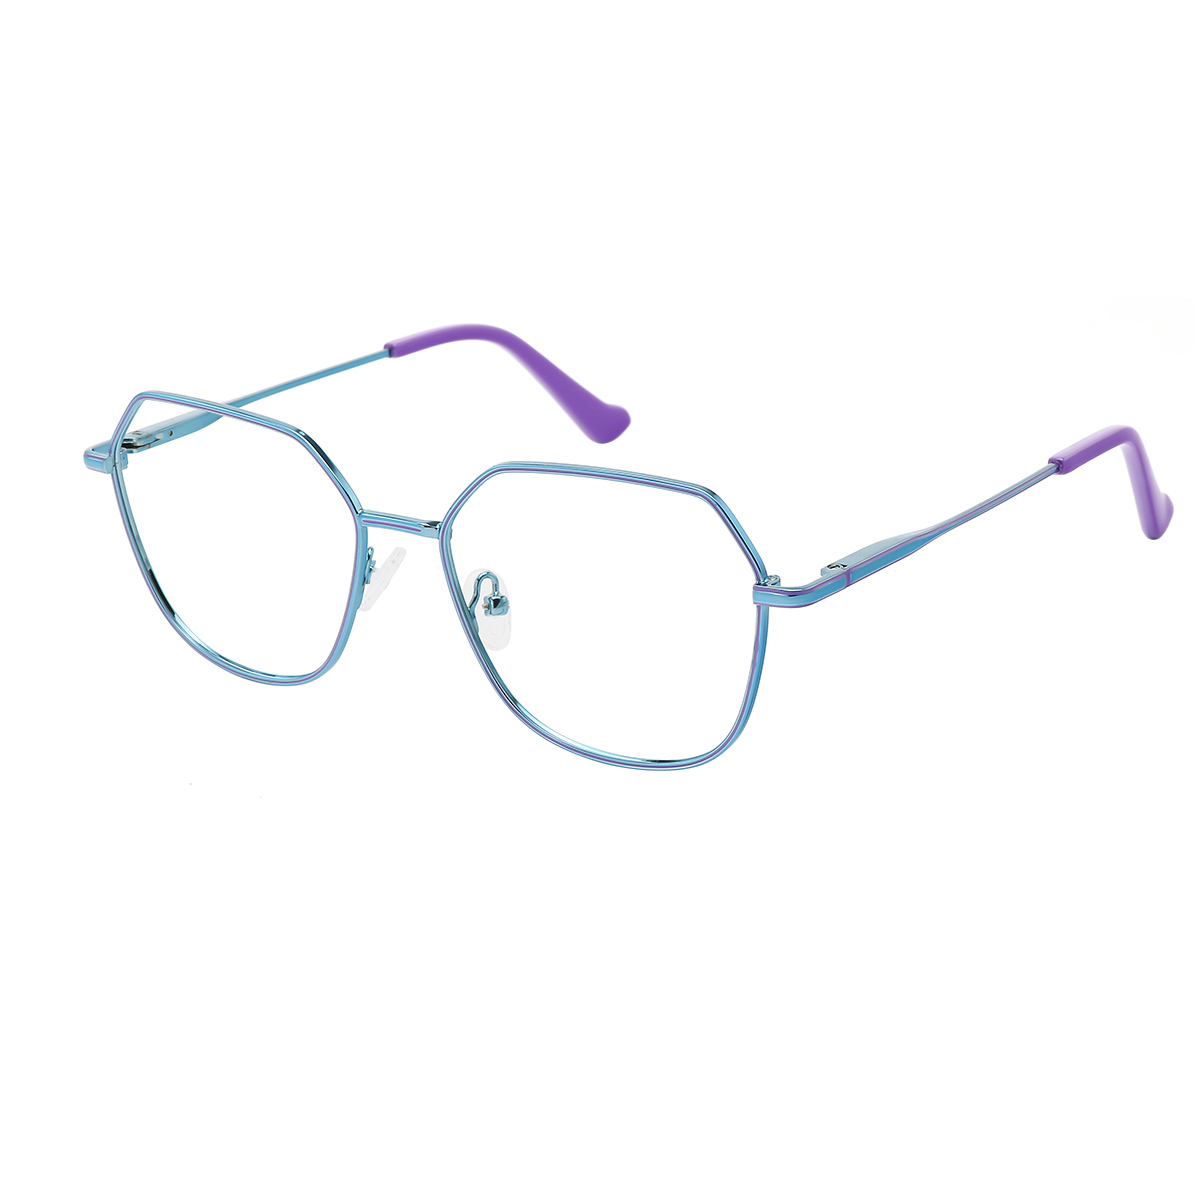 Fran - Geometric Blue/Purple Reading Glasses for Women